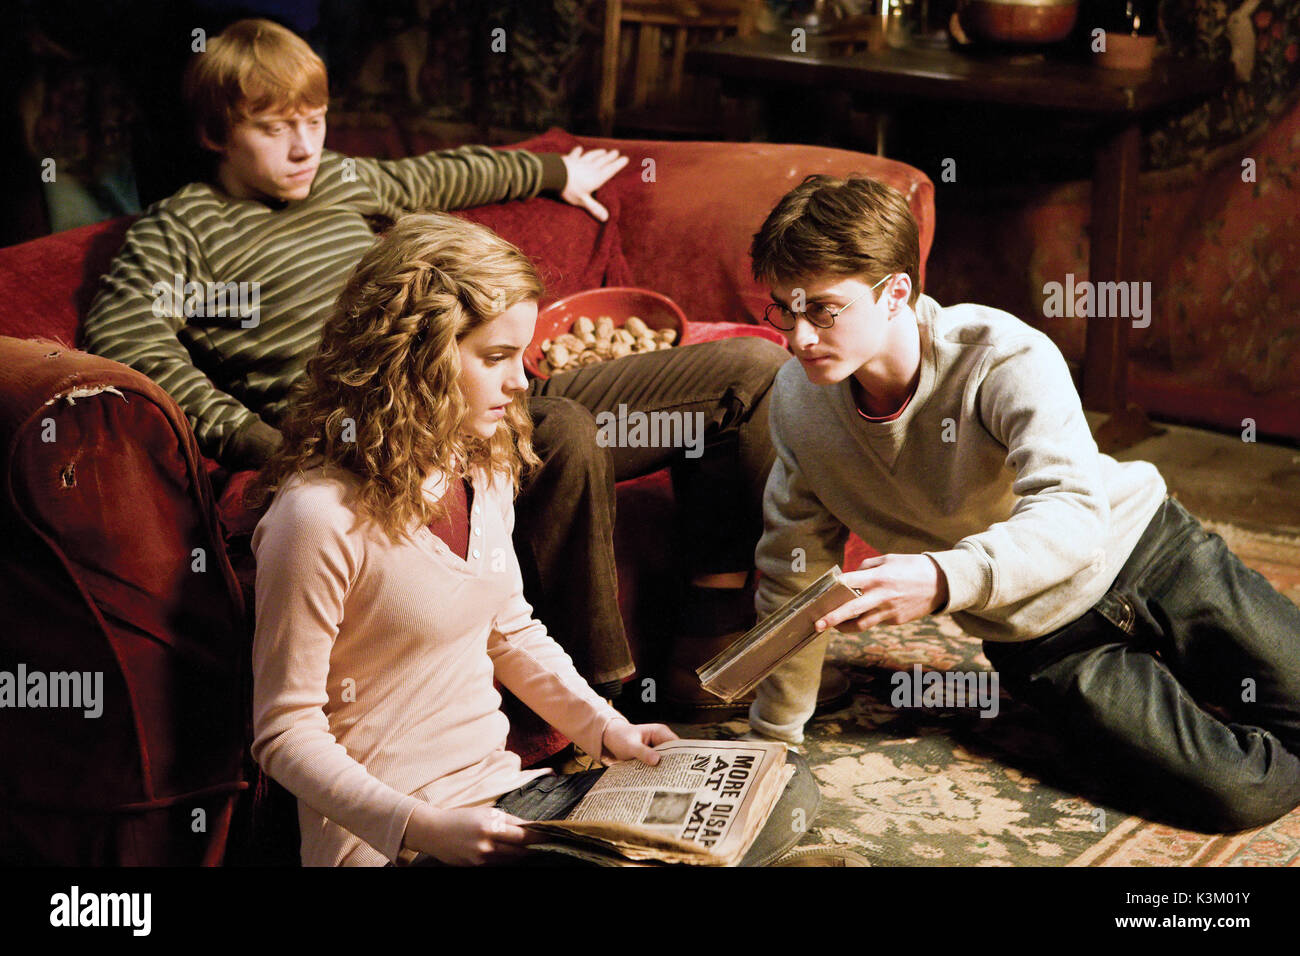 Hermione Granger dating